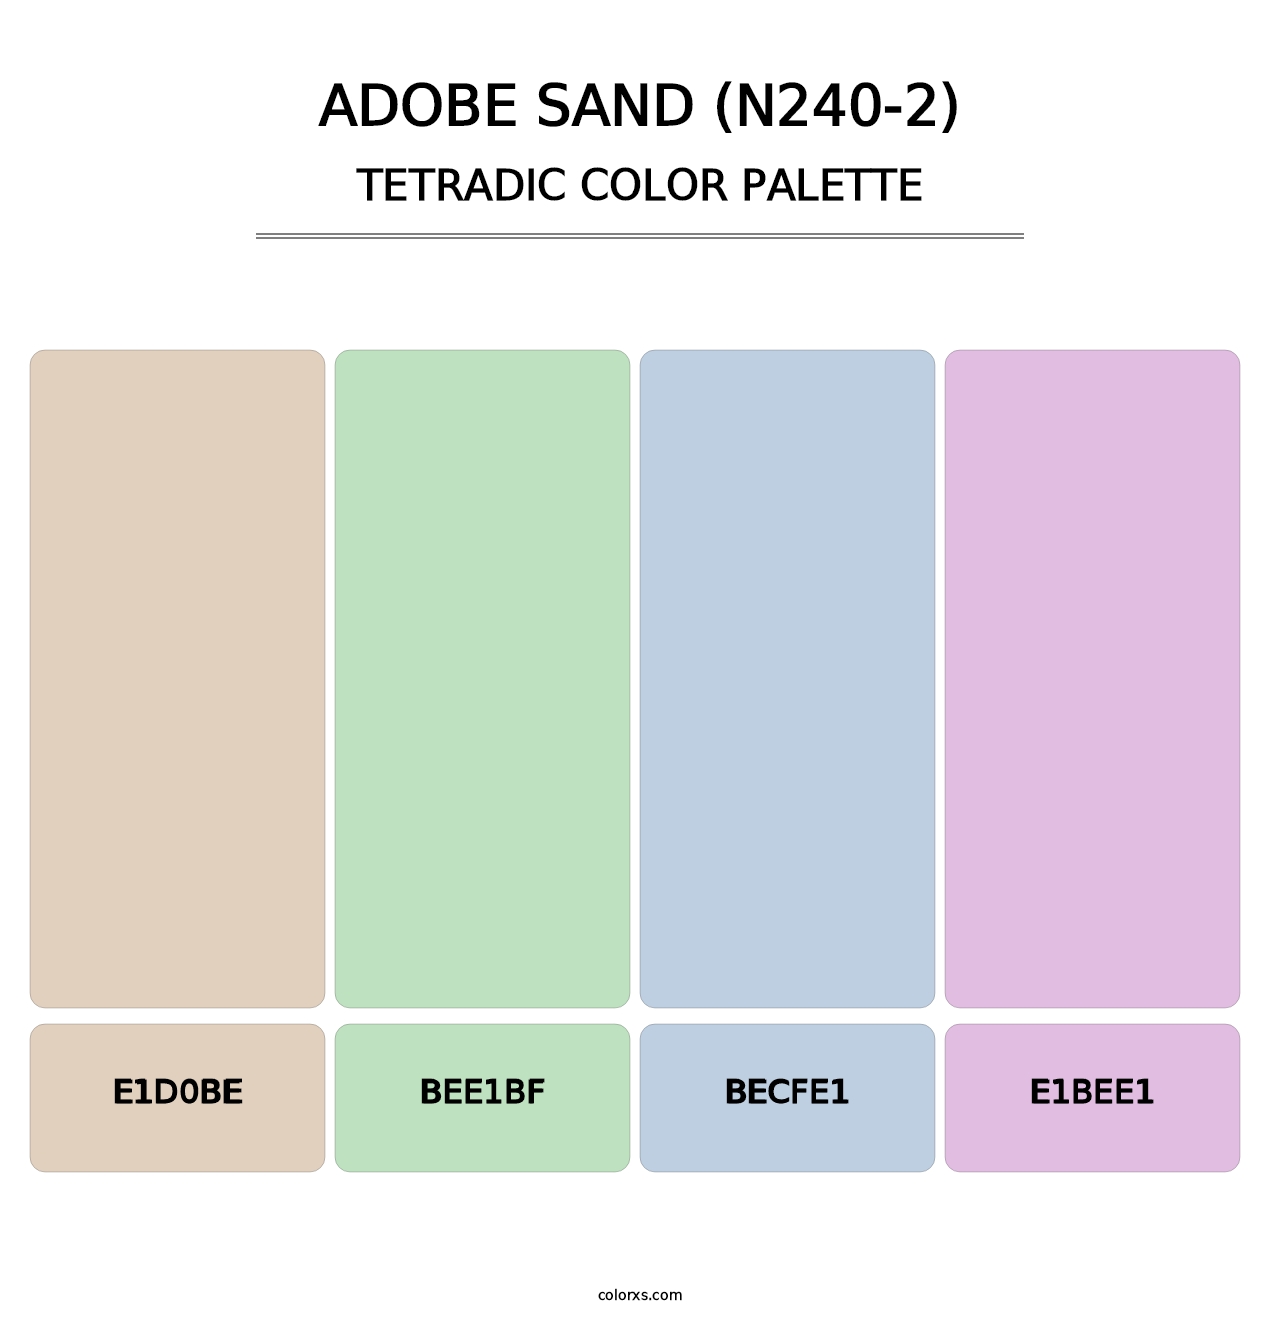 Adobe Sand (N240-2) - Tetradic Color Palette